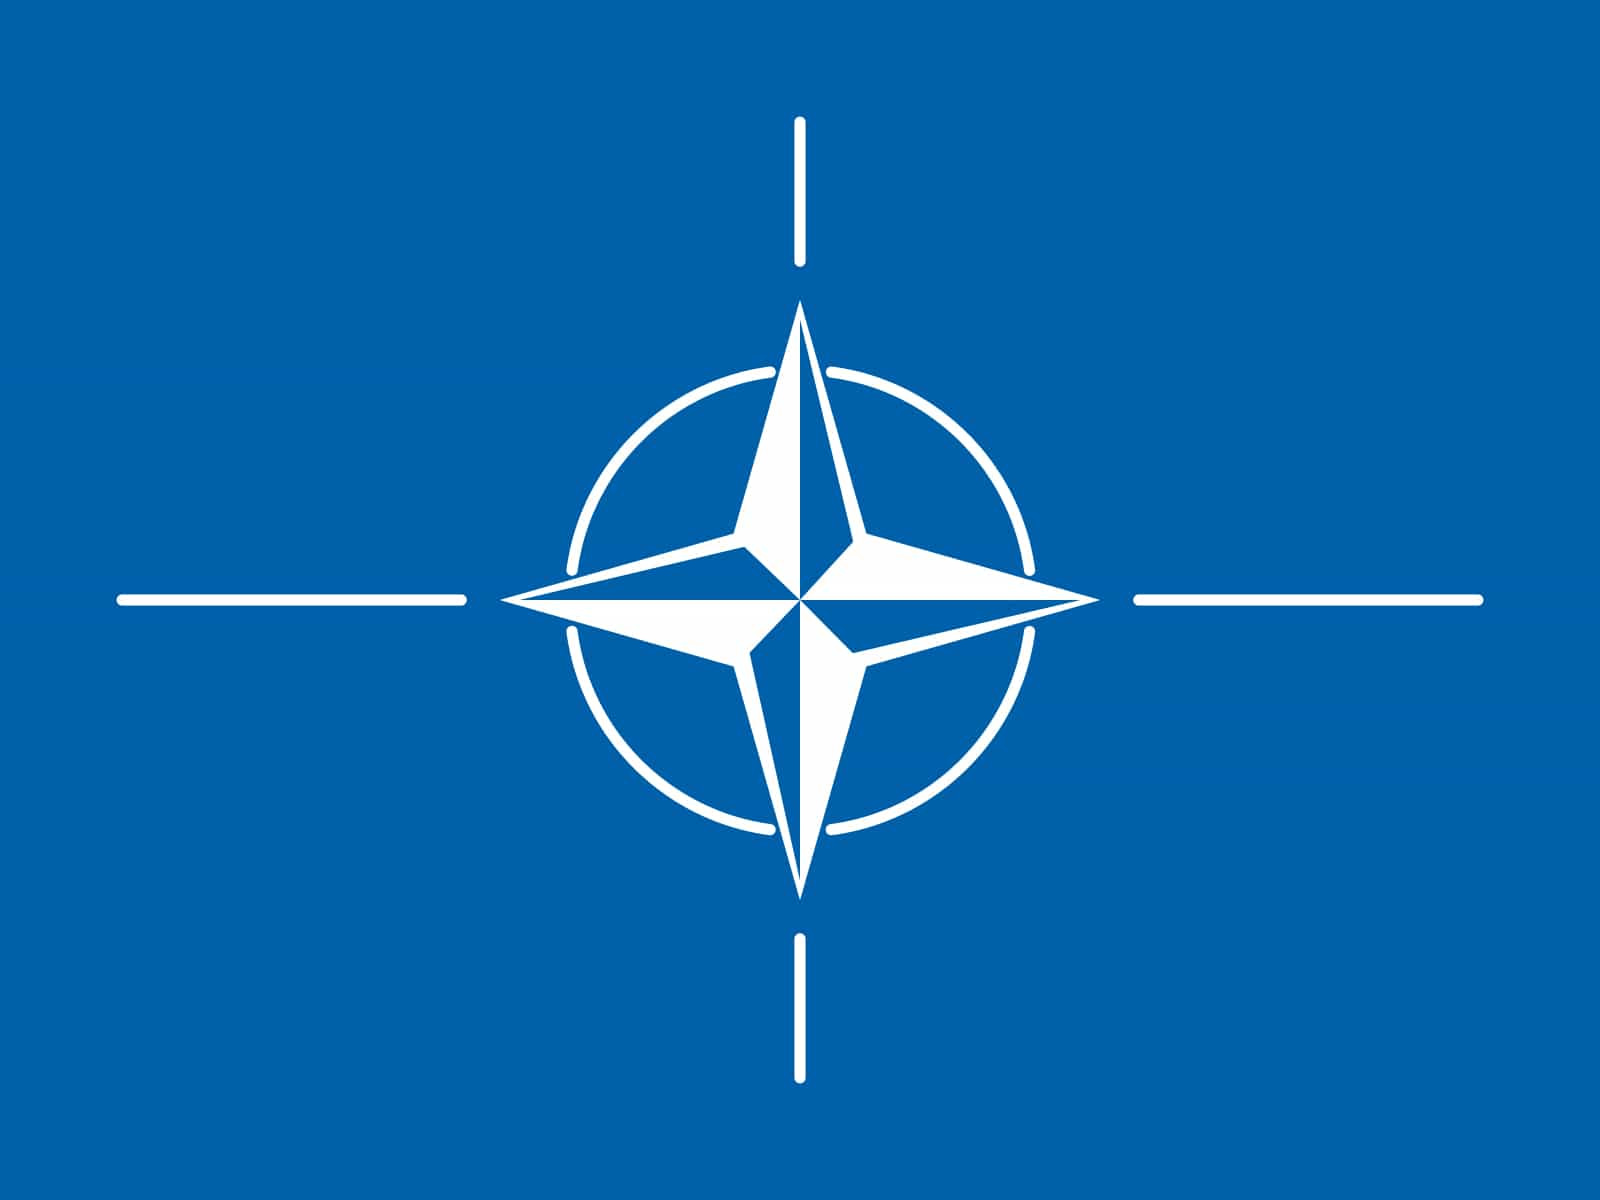 नाटो संघटना काय आहे?, नाटो संघटना, North Atlantic Treaty Organization, NATO in marathi, NATO Wikipedia, NATO mahiti